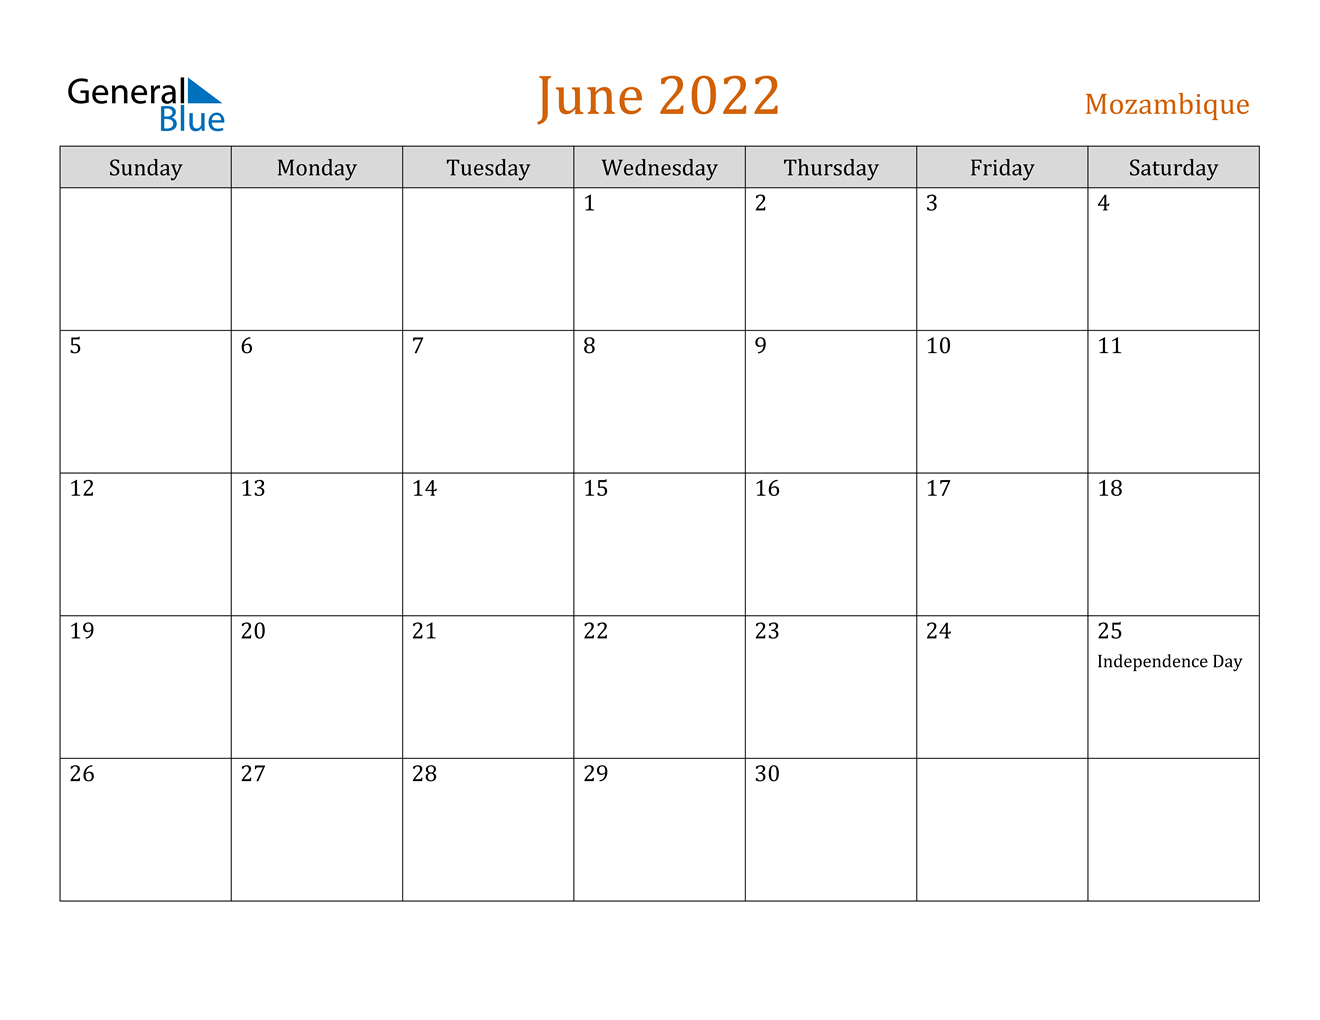 Get Calendar Dates For June 2022